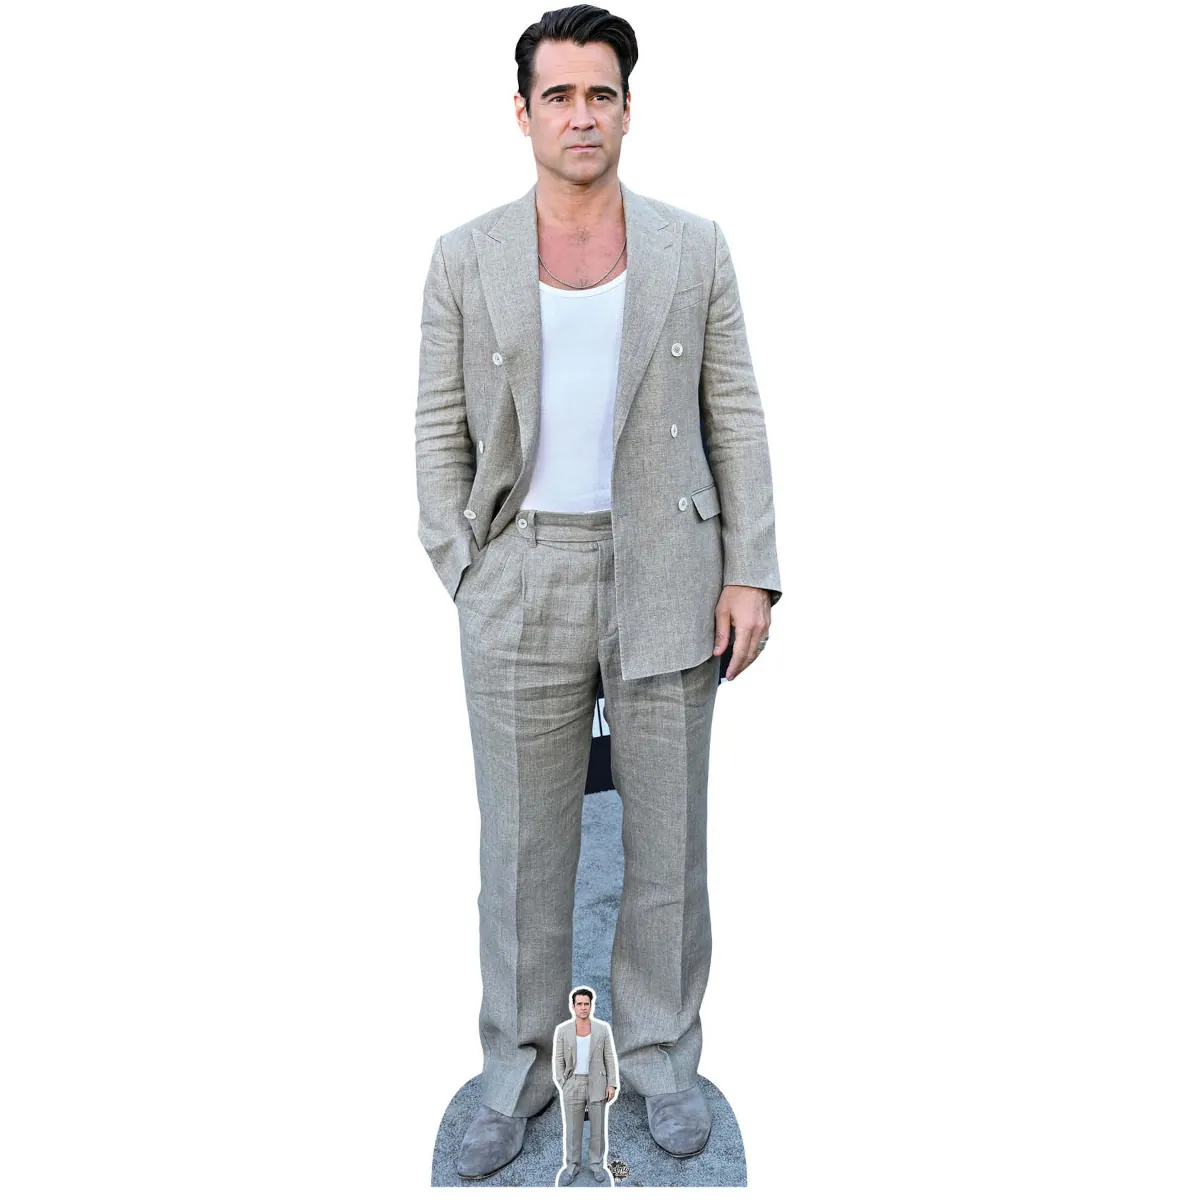 CS1072 Colin Farrell 'Grey Suit' (Irish Actor) Lifesize + Mini Cardboard Cutout Standee Front